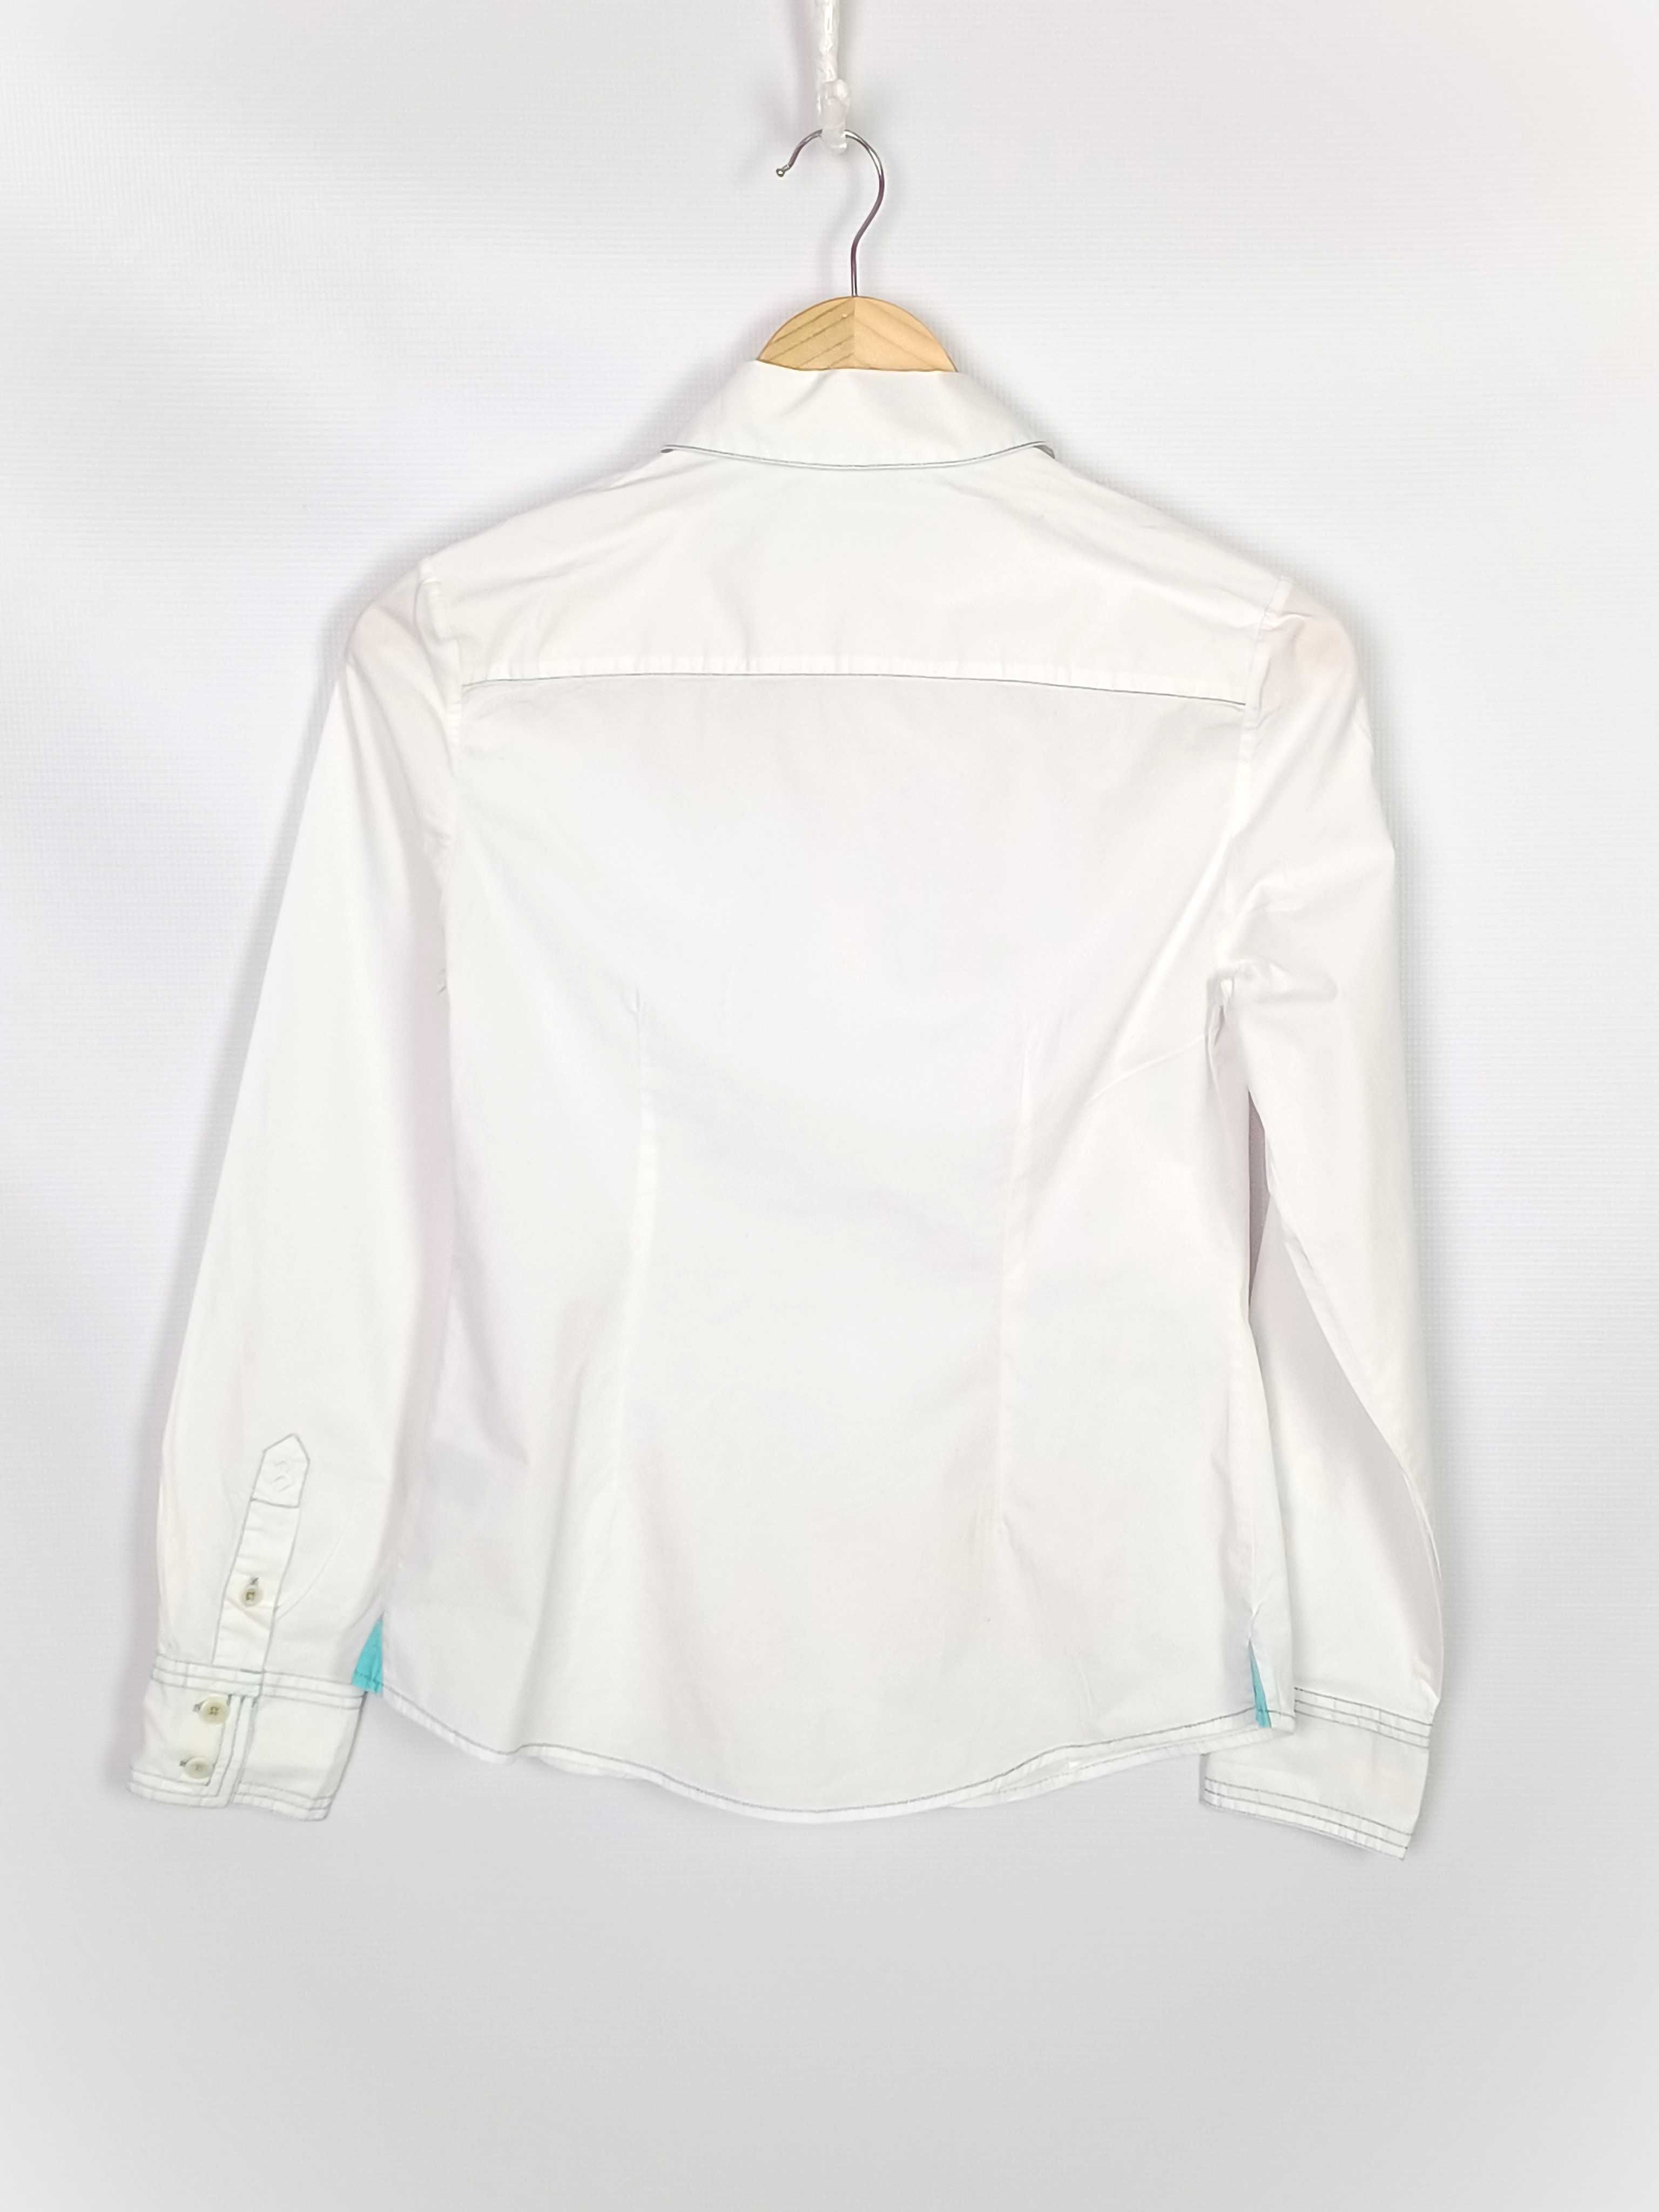 Biała koszula markowa bawełniana damska Boden 36 S